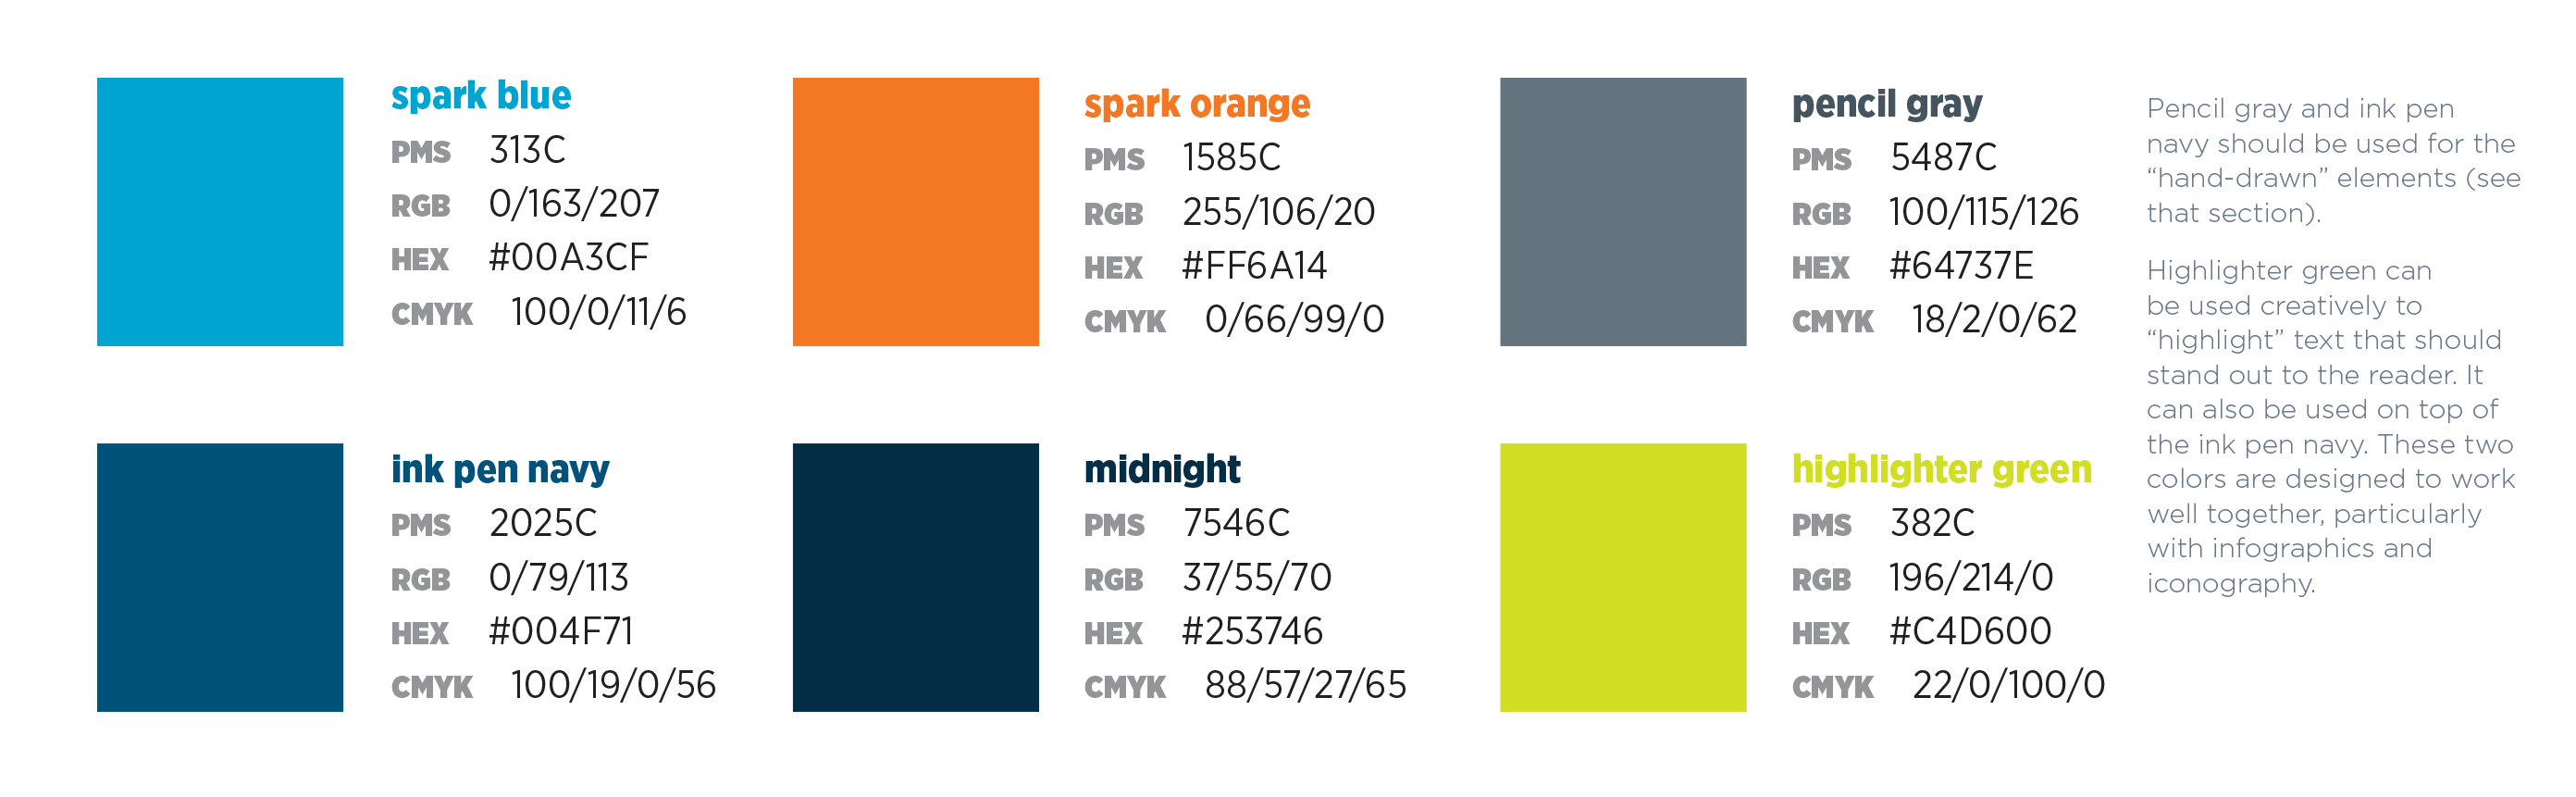 CompTIA-Spark-Brand_color palette